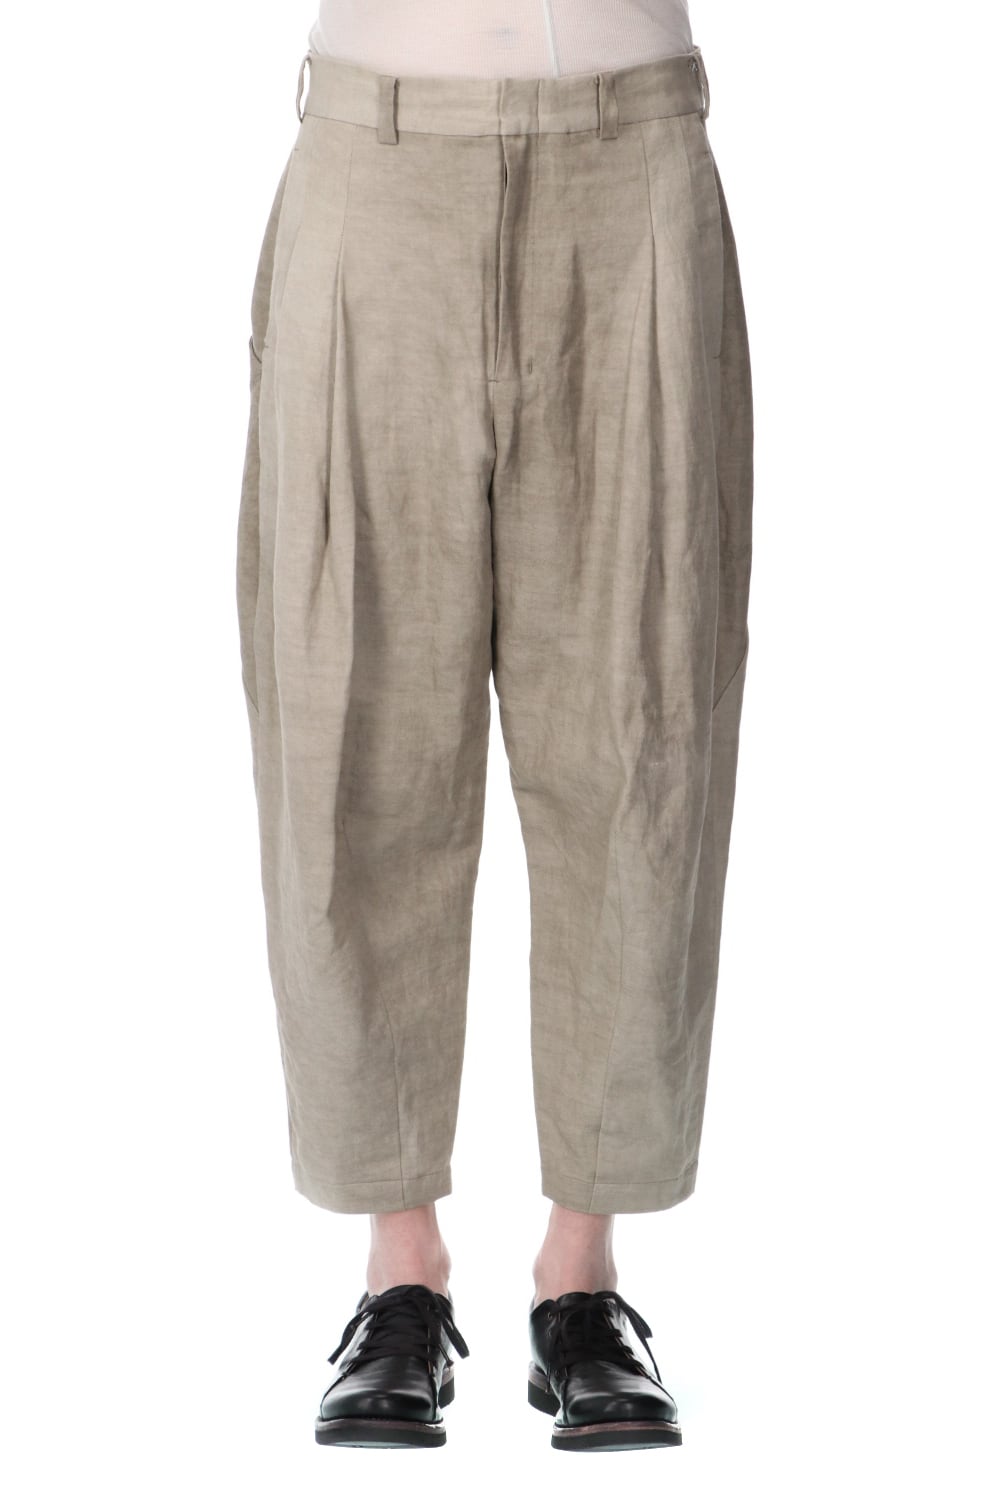 PTF-STC | Cropped pants cotton/ ramie/ canapa cold dyed | DEVOA ...